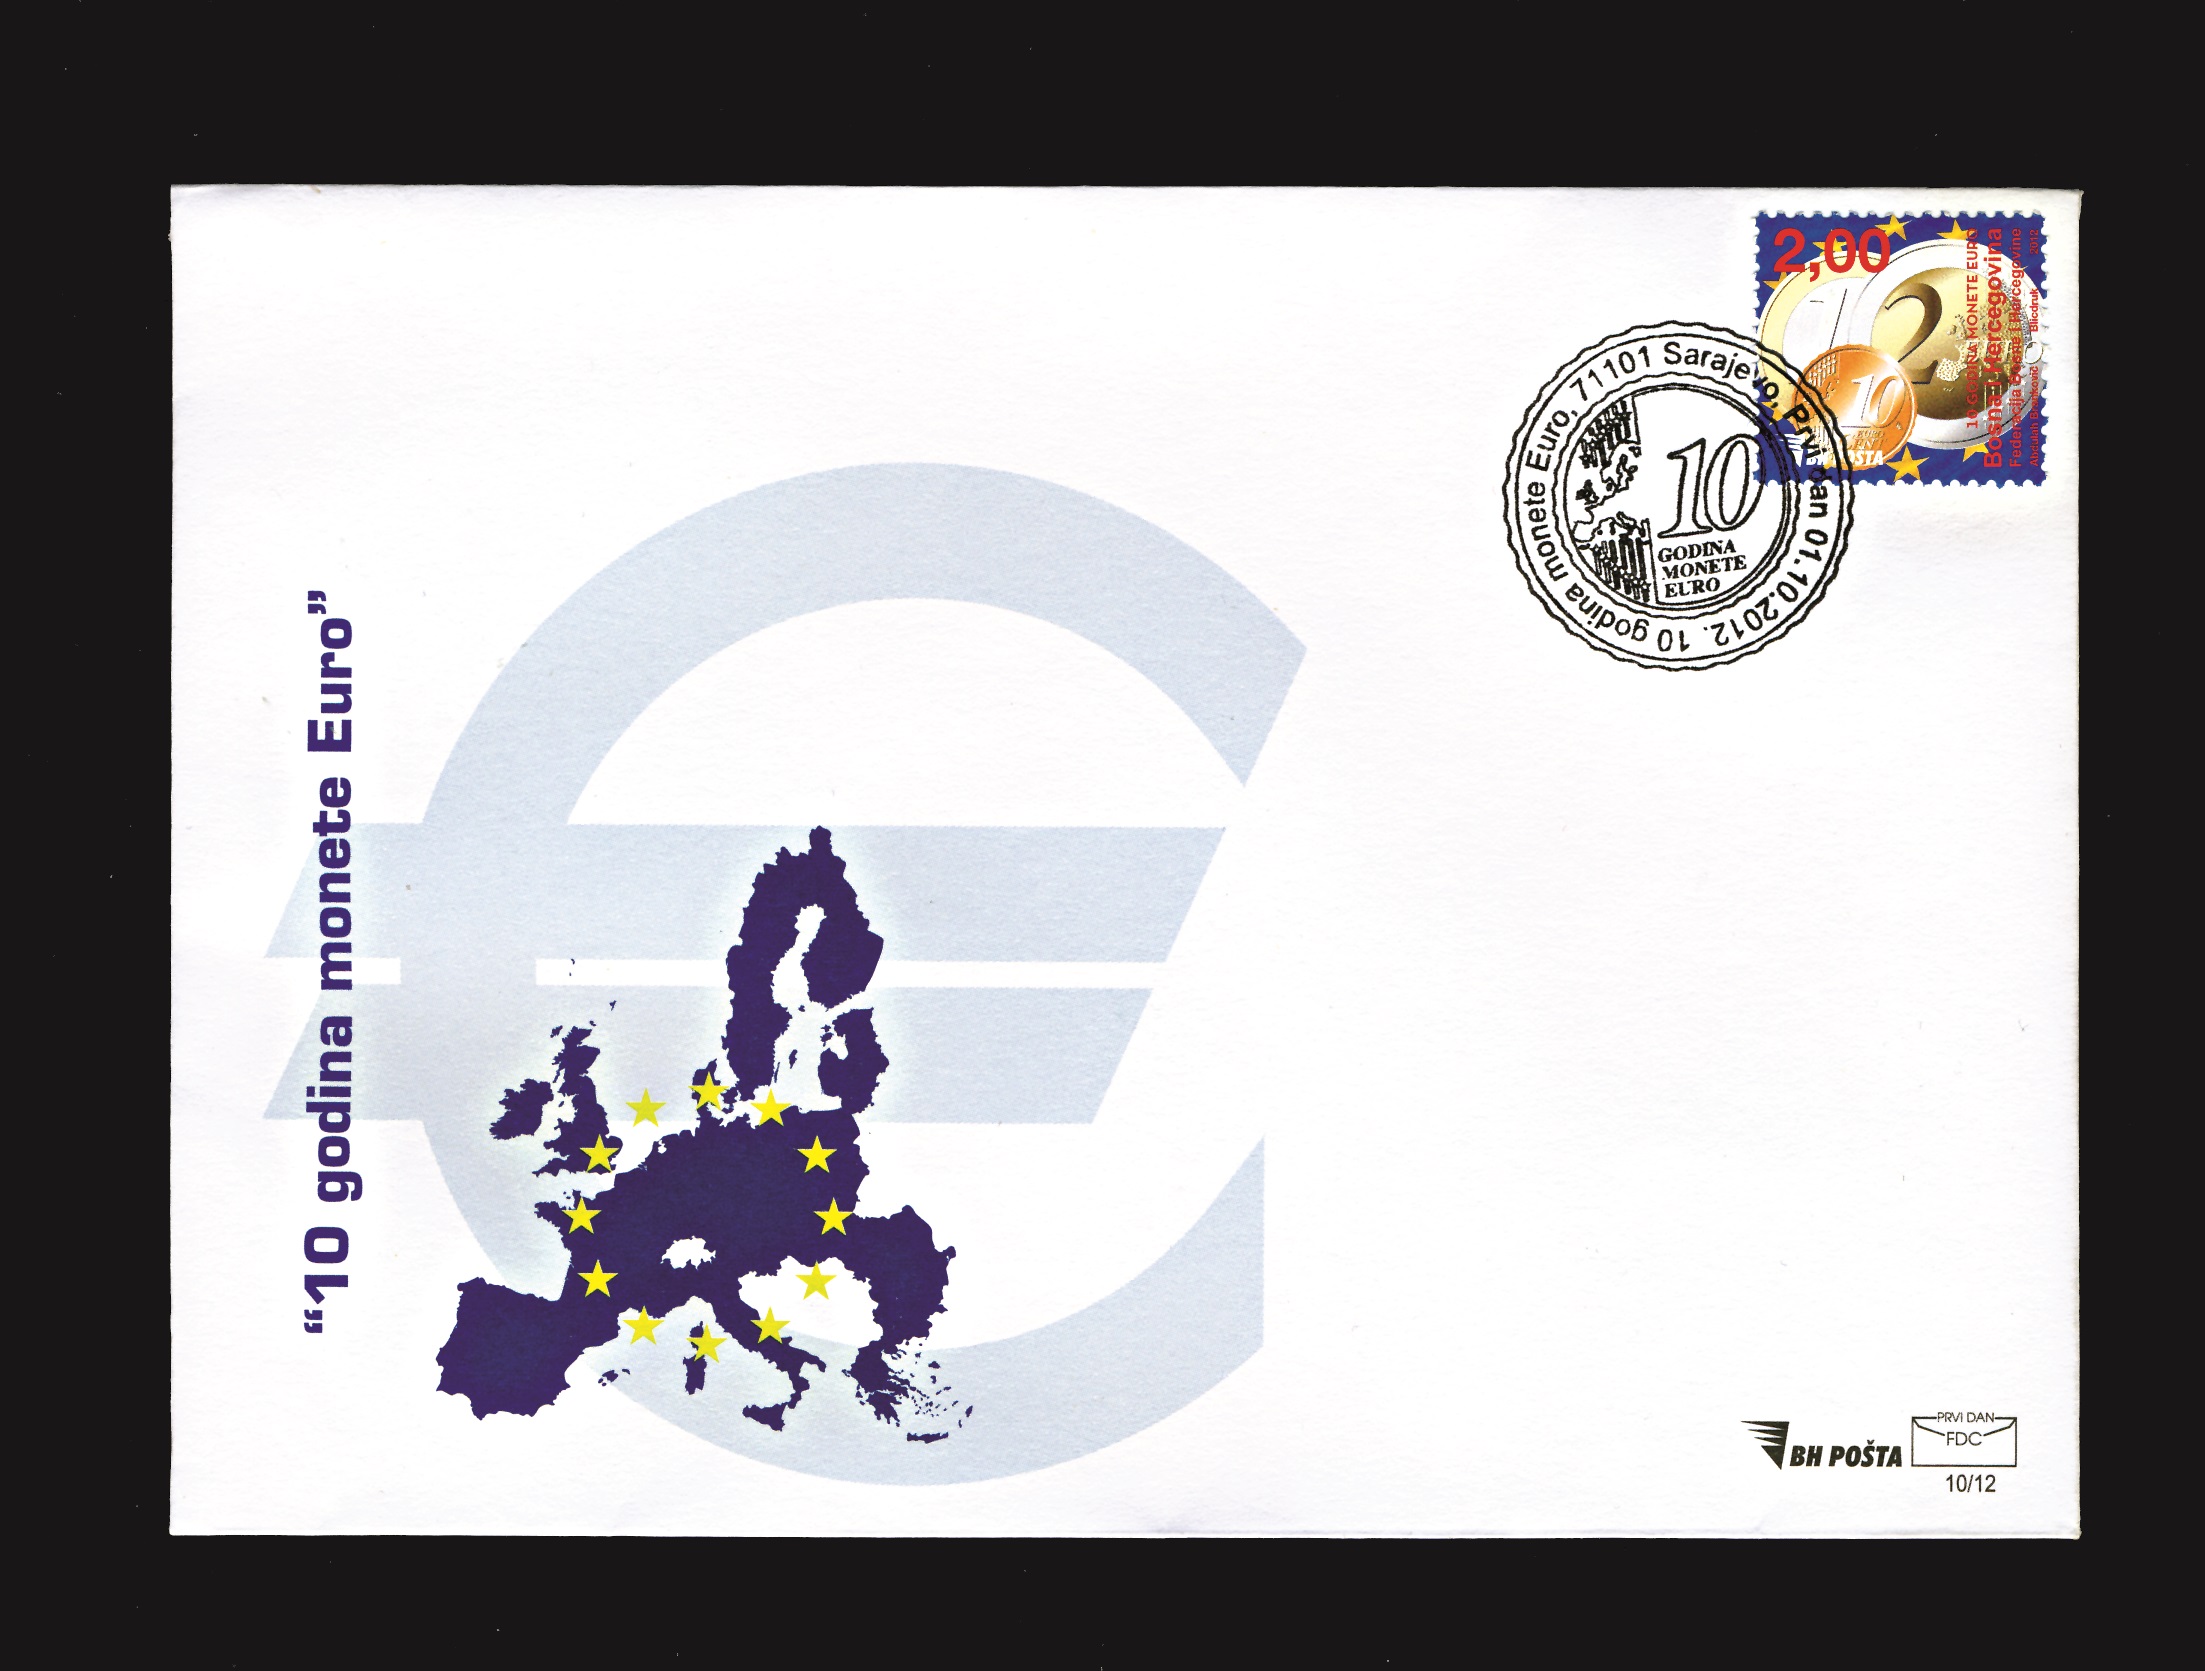 jubilej---10-godina-monete-euro-fdc